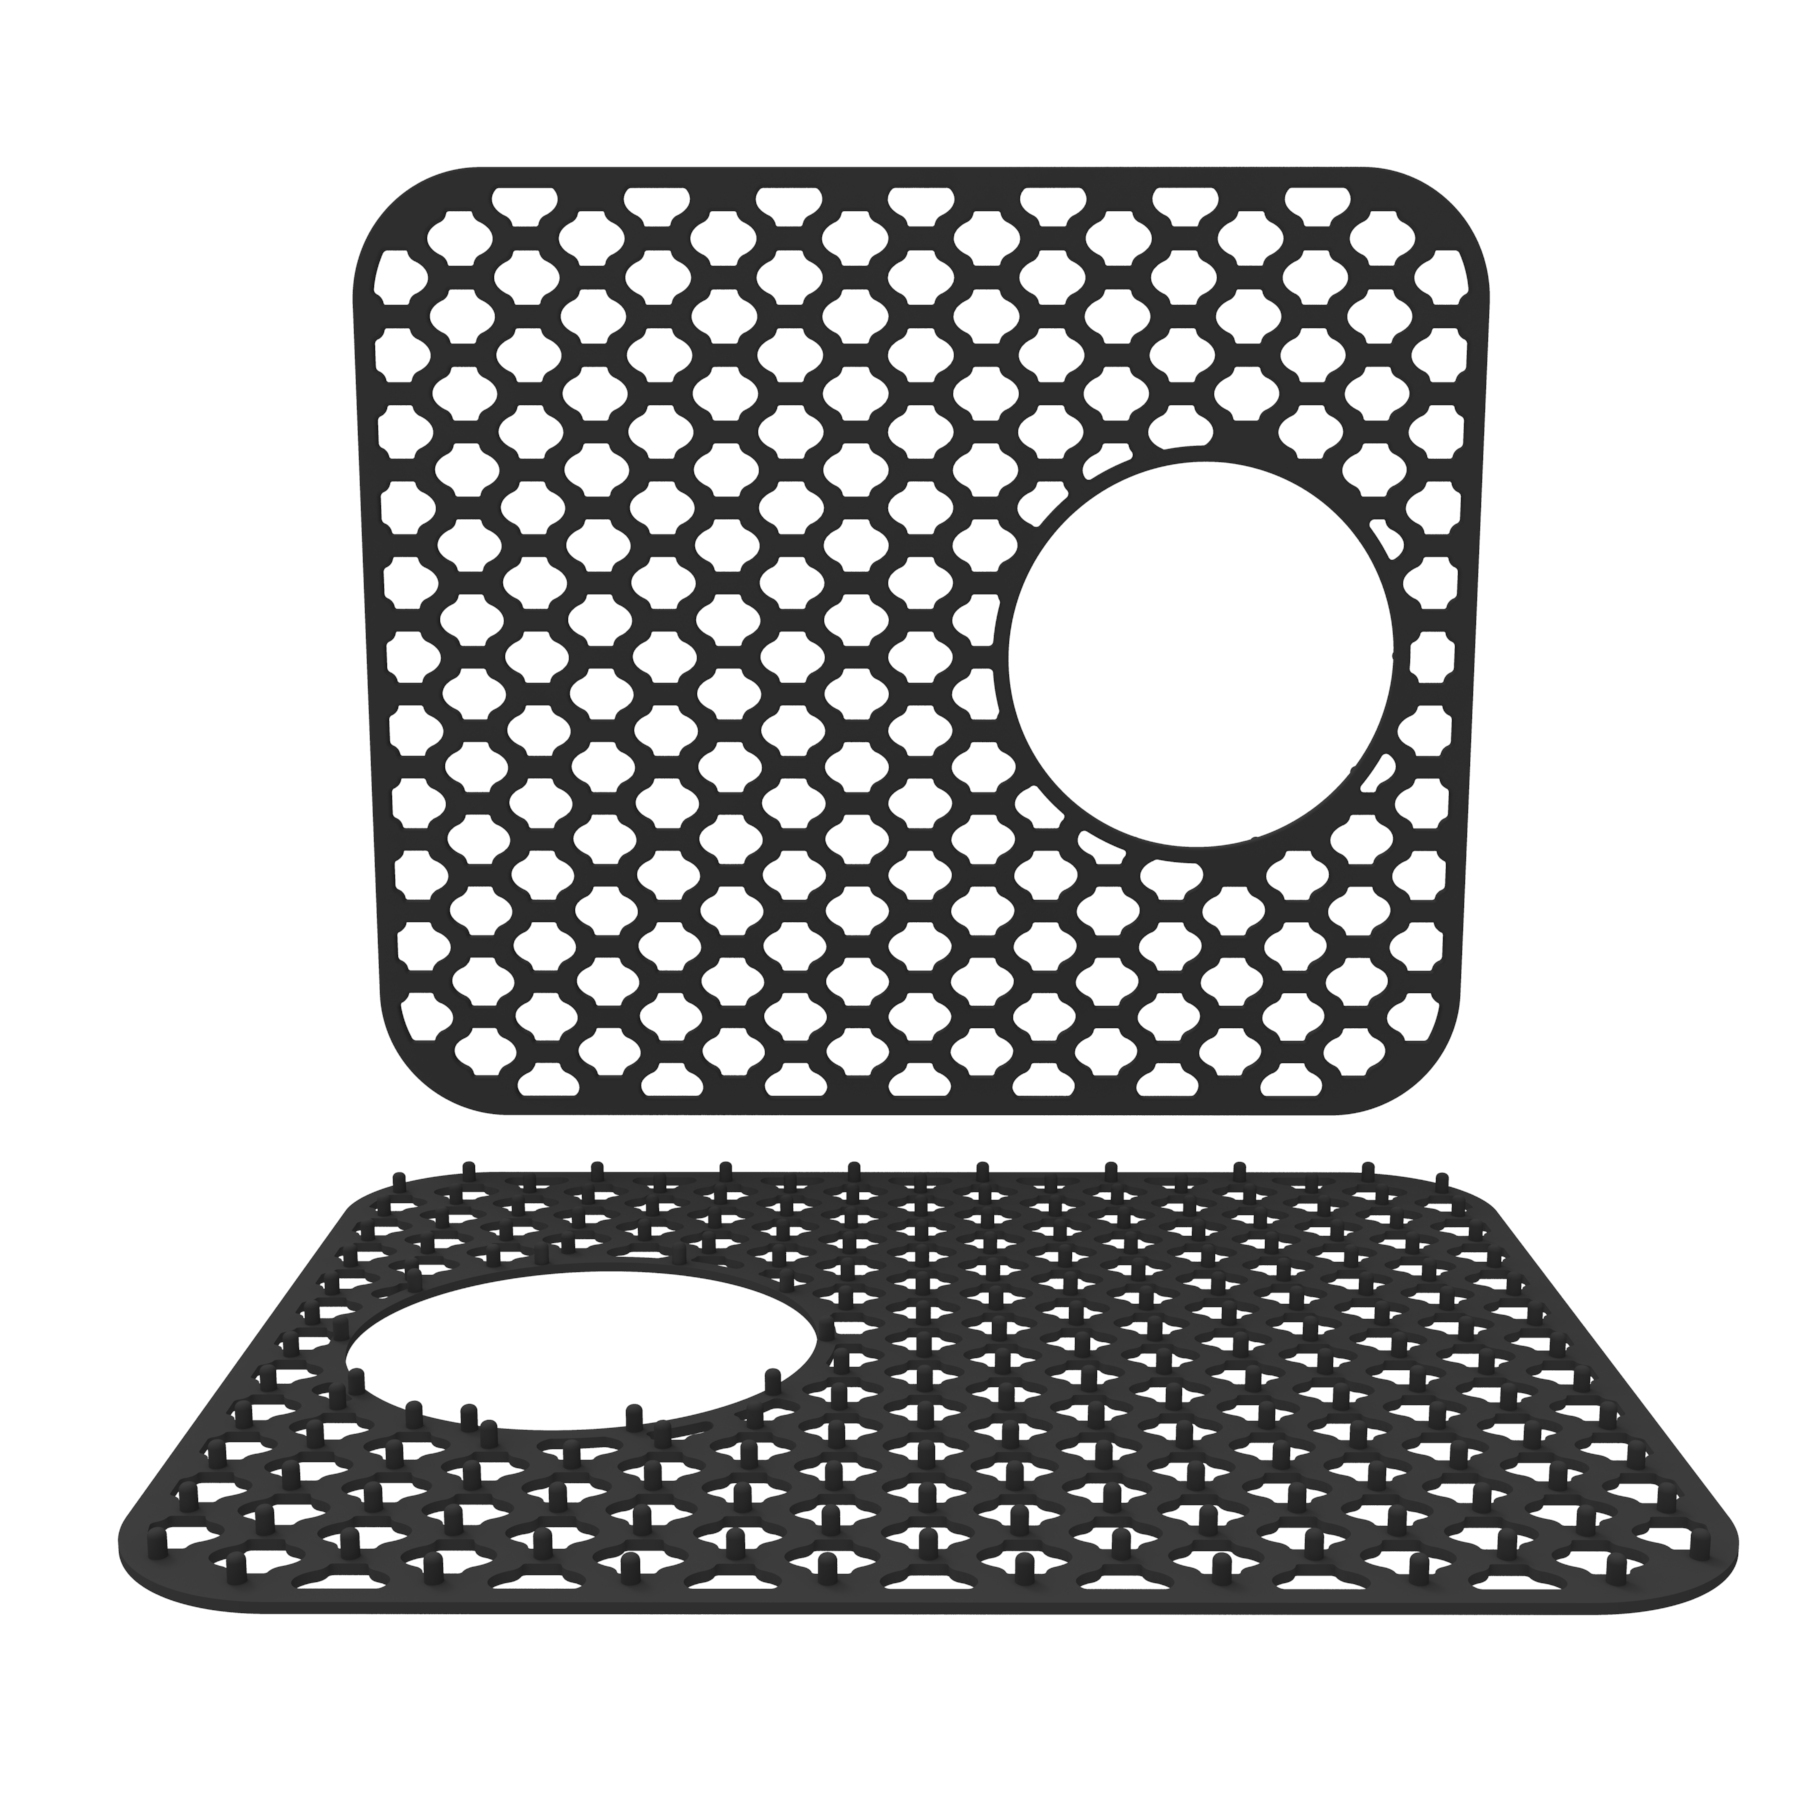 Kitchen Silicone Sink Protector, LONGRV 2 PCS Folding Anti-Slip Sink Mat  Grid for Farmhouse Bottom Stainless Steel Ceramic Sink (13.6 x 11.6) 